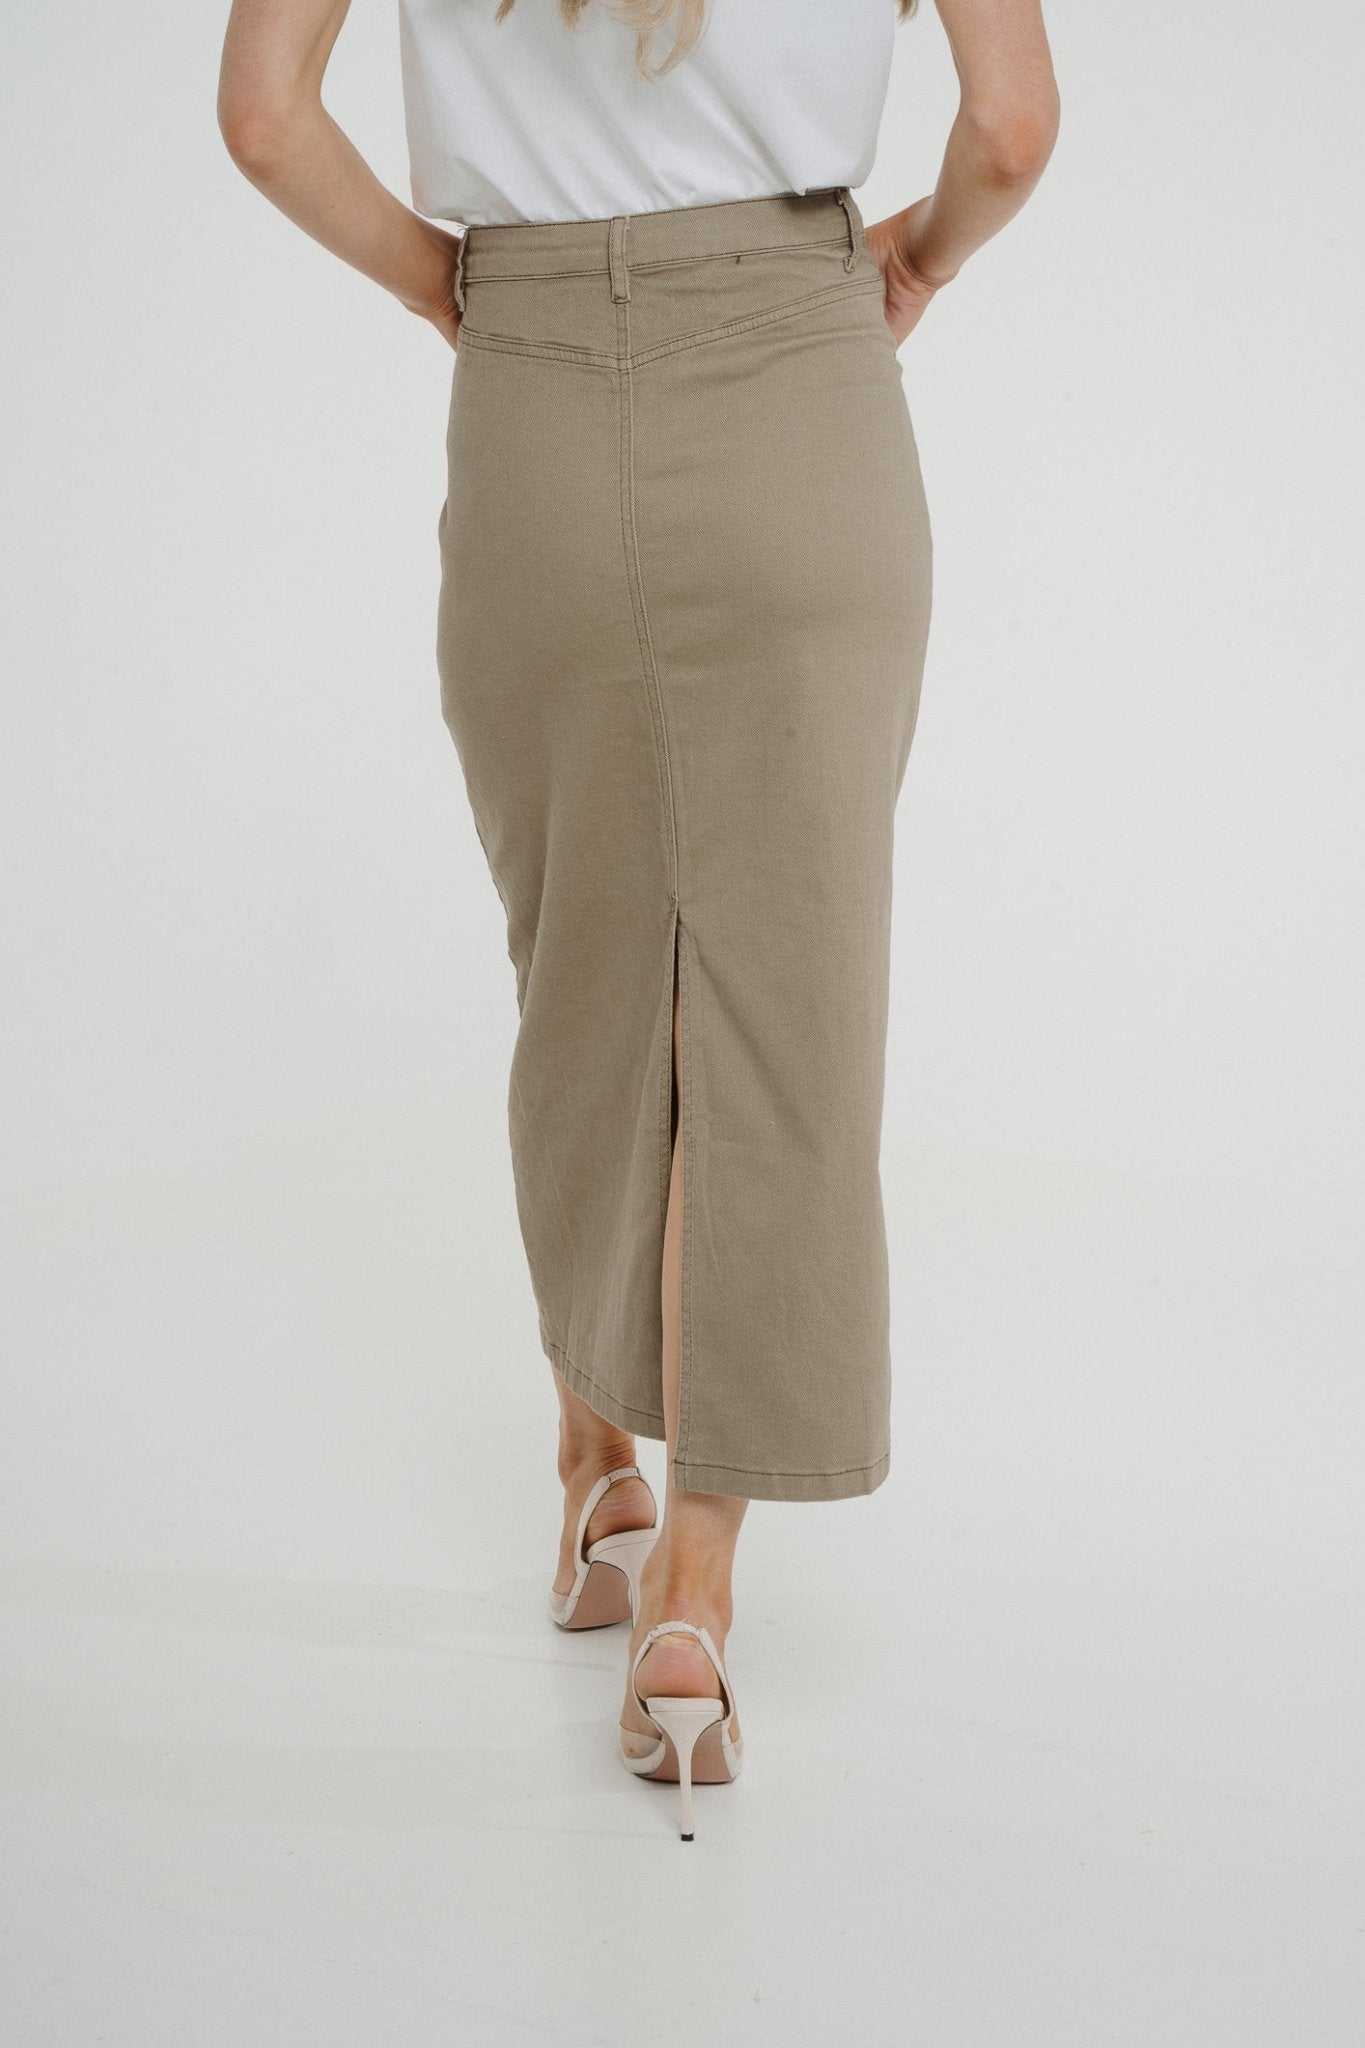 Ivy Midi Skirt In Khaki - The Walk in Wardrobe